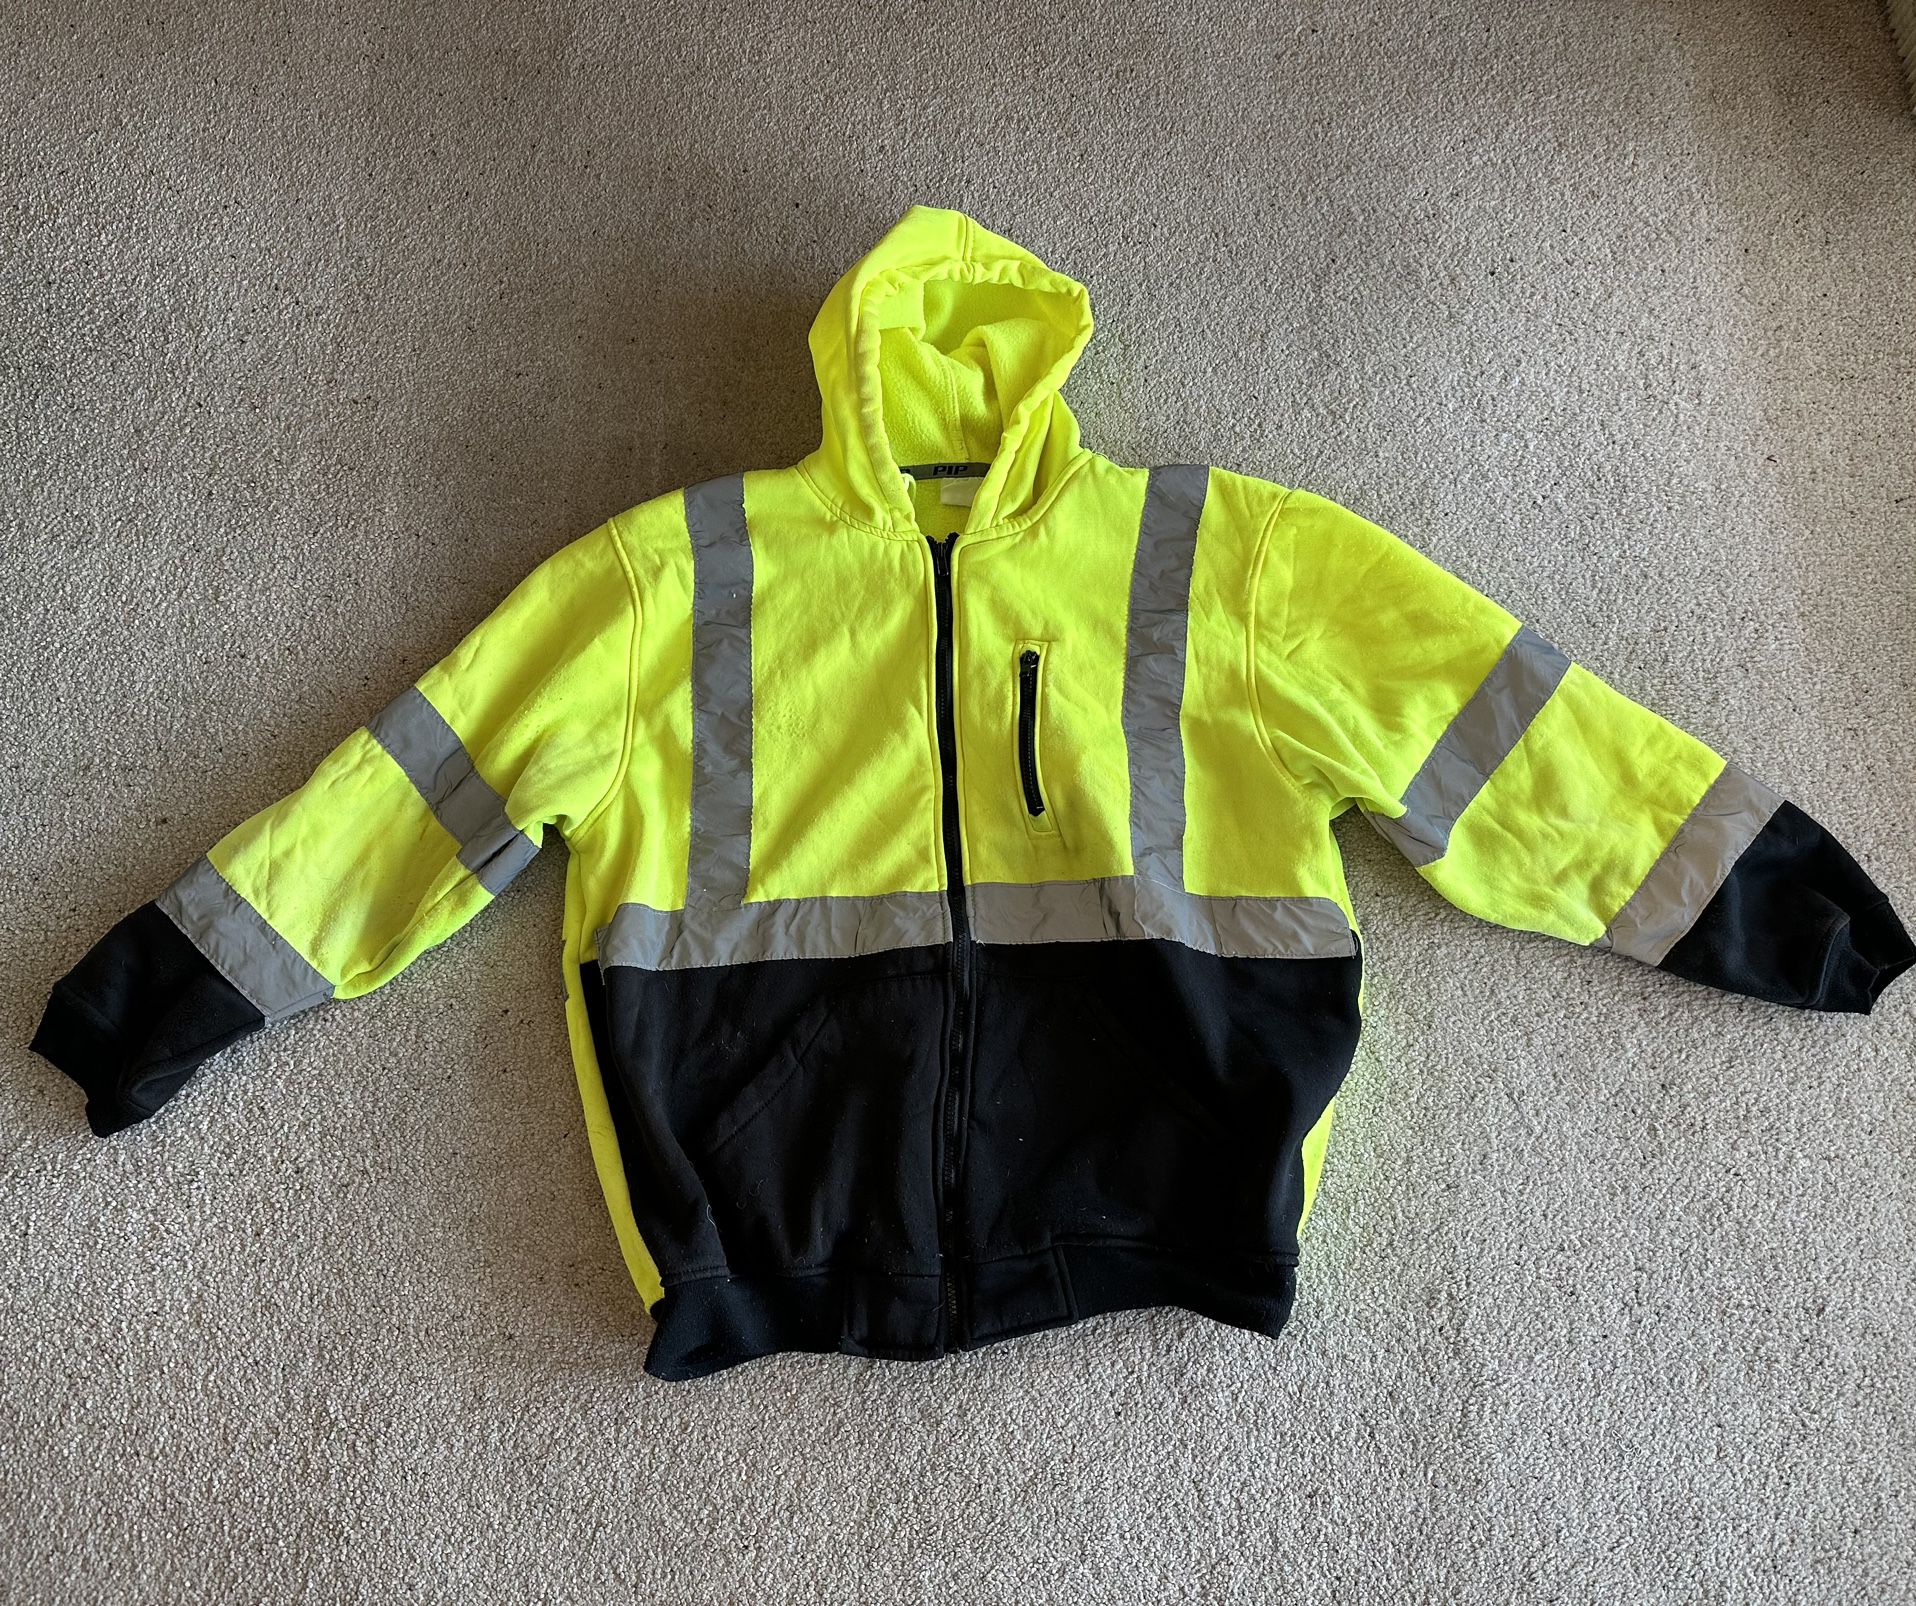 PIP Men’s 2XL 2X Large Type R Class 3 Yellow Lime Black Bottom Full Zip Hooded Safety Sweatshirt Jacket Hoodie Construction Survey